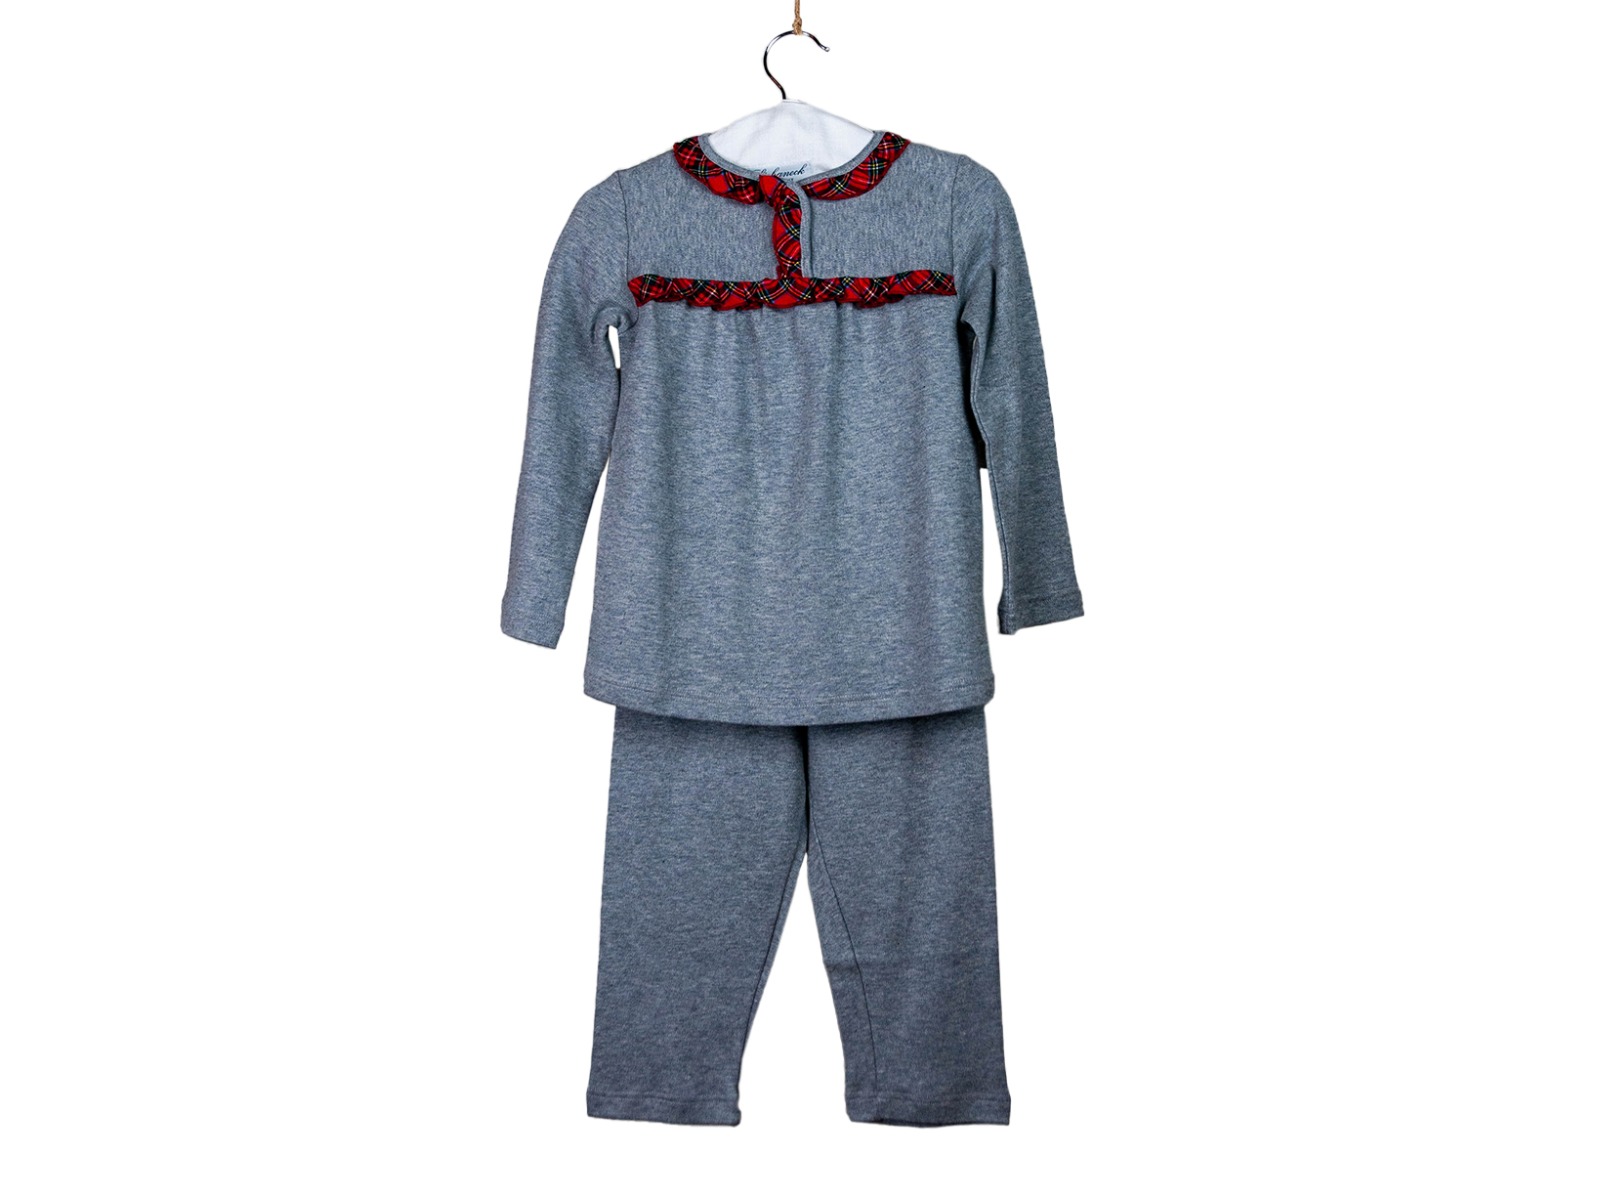 Siebaneck, i pigiami artigianali italiani: - bambina - mod. 101 Bimba grigia/rossa